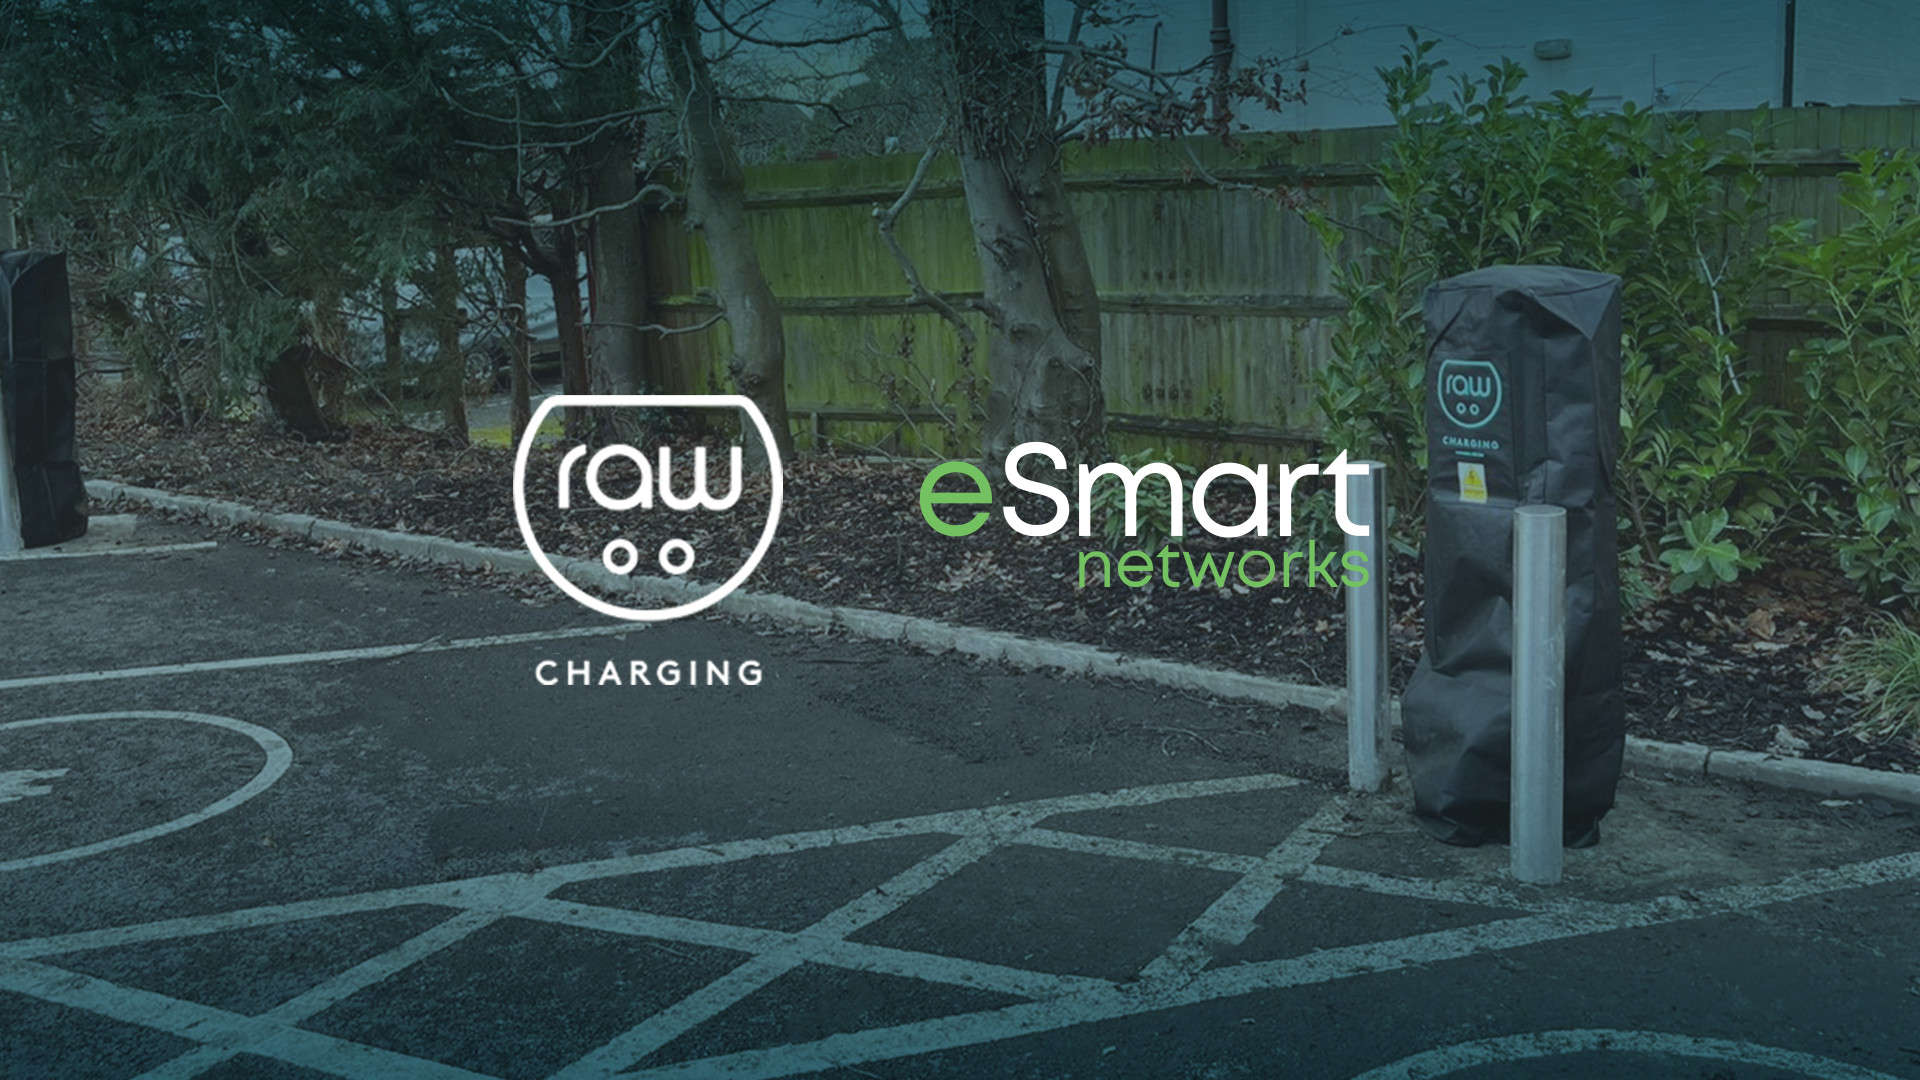 esmart networks partner with Raw Charging UK